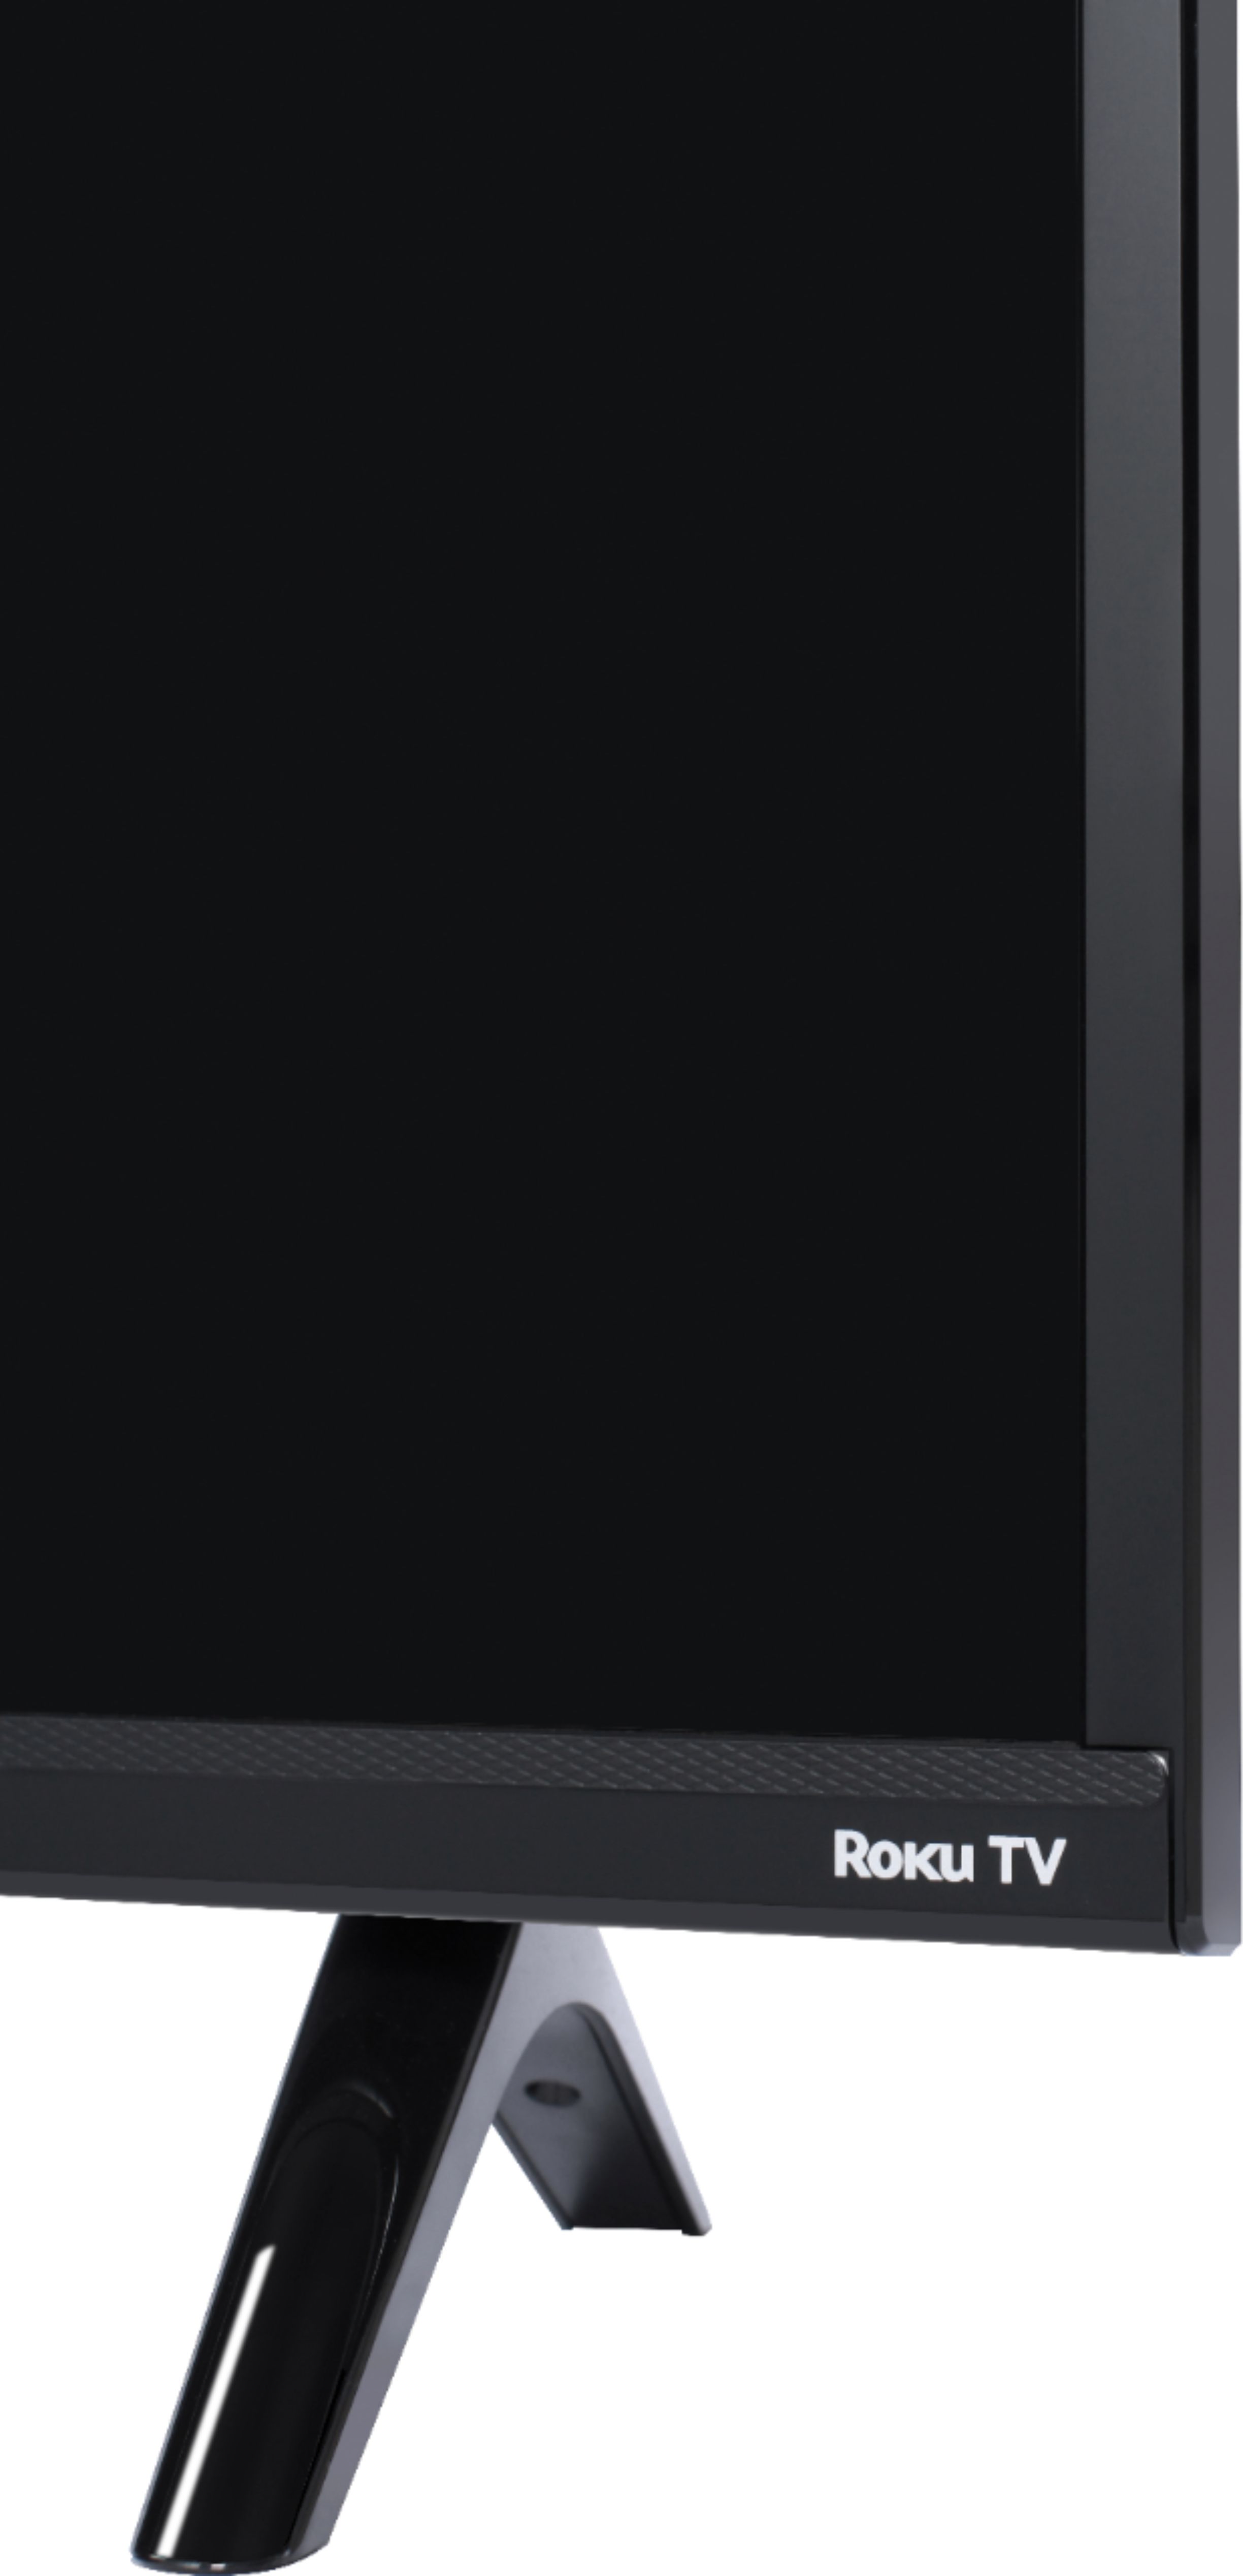 Corotos  TELEVISOR 40 PULGADAS TCL ROKU SMART FULL HD 1080P $23,500